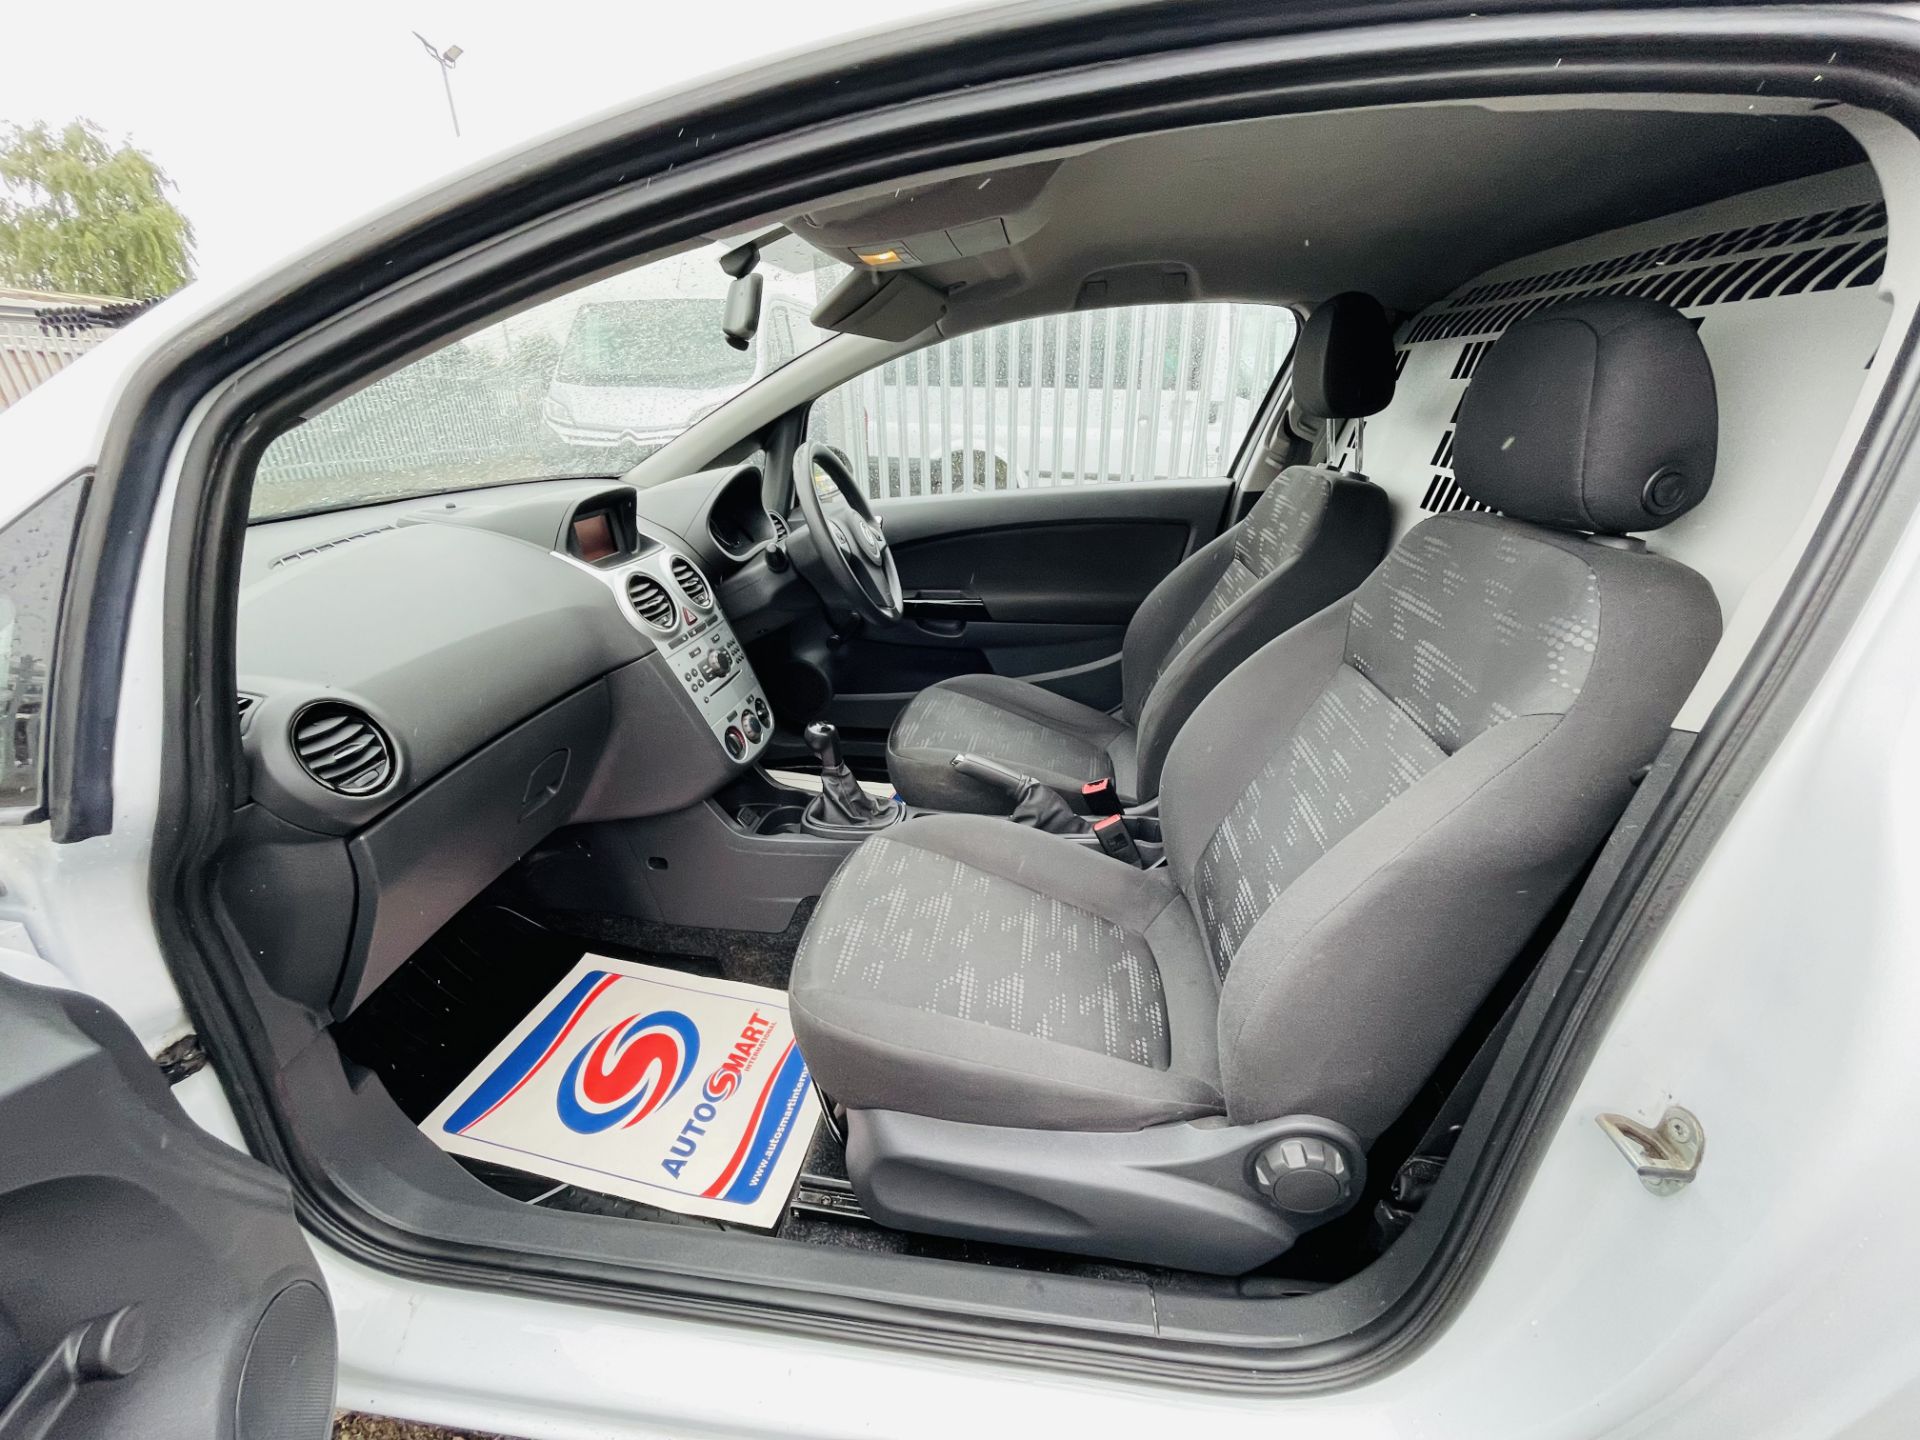 Vauxhall Corsa 1.2 CDTI Eco-Flex 2015 '15 Reg' - LCV - No Vat Save 20% - Image 12 of 17